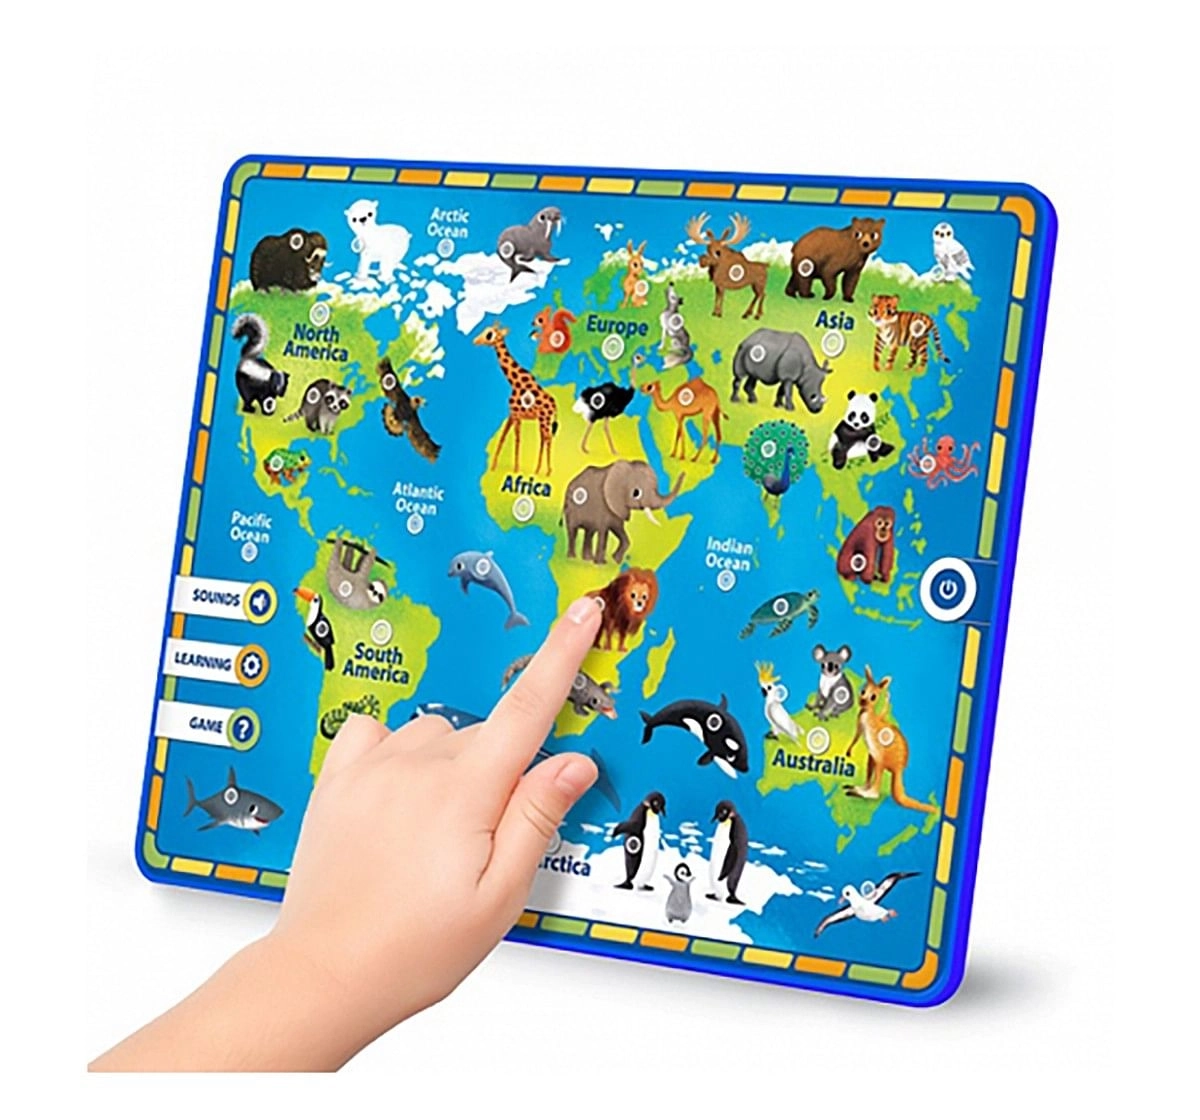 Comdaq AZ Kids' Pad My First Atlas Learning Toy for Kids age 3Y+ (Green)